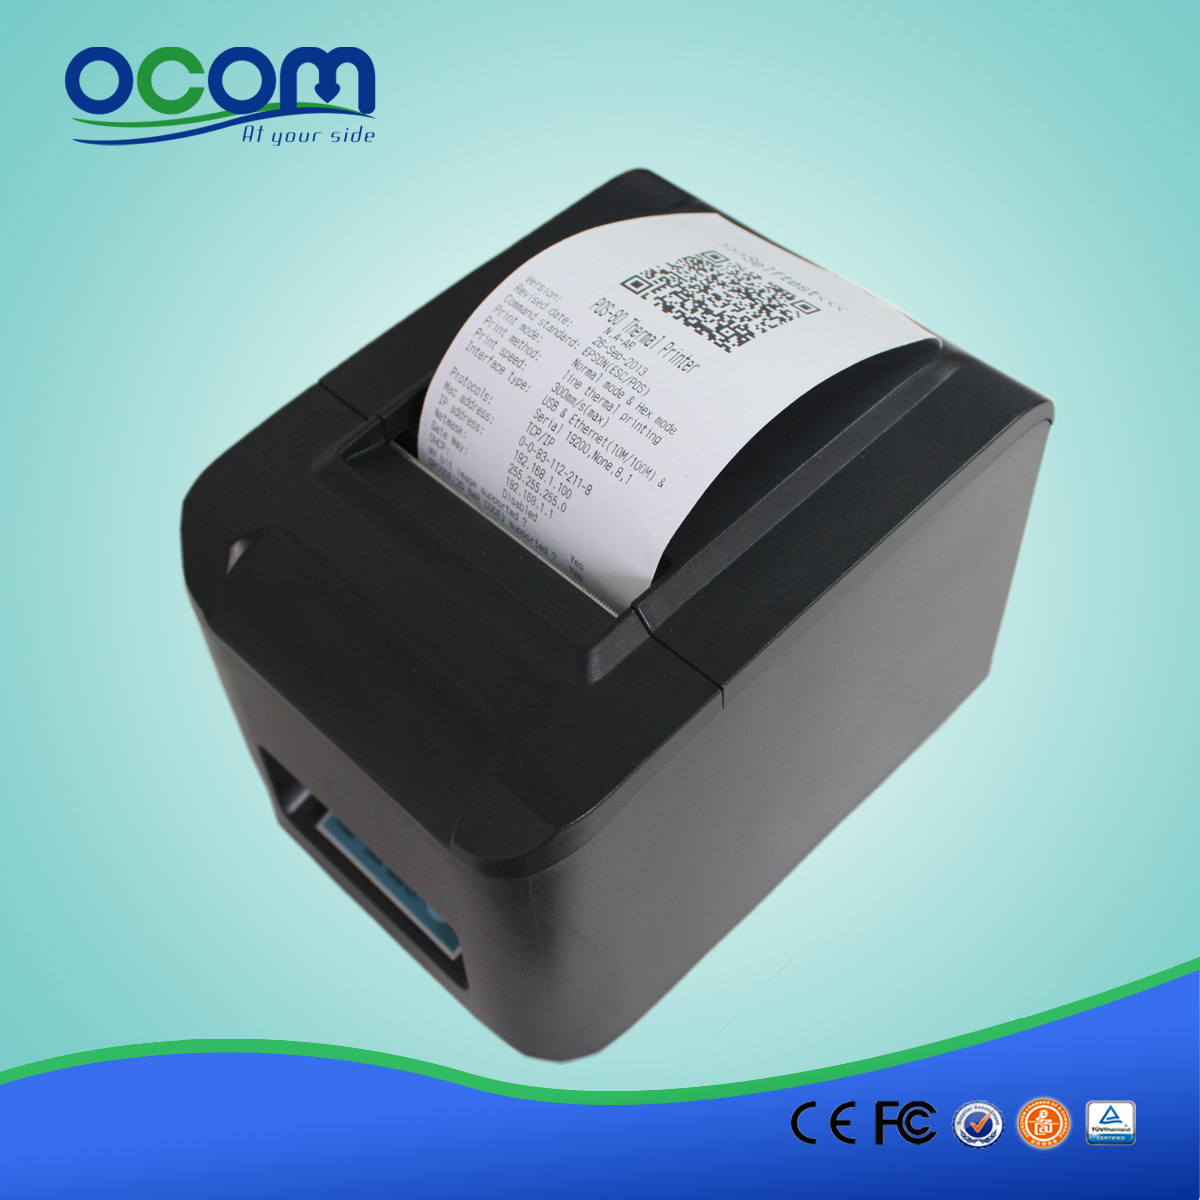 80mm high speed WIFI POS receipt printer-OCPP-808-W